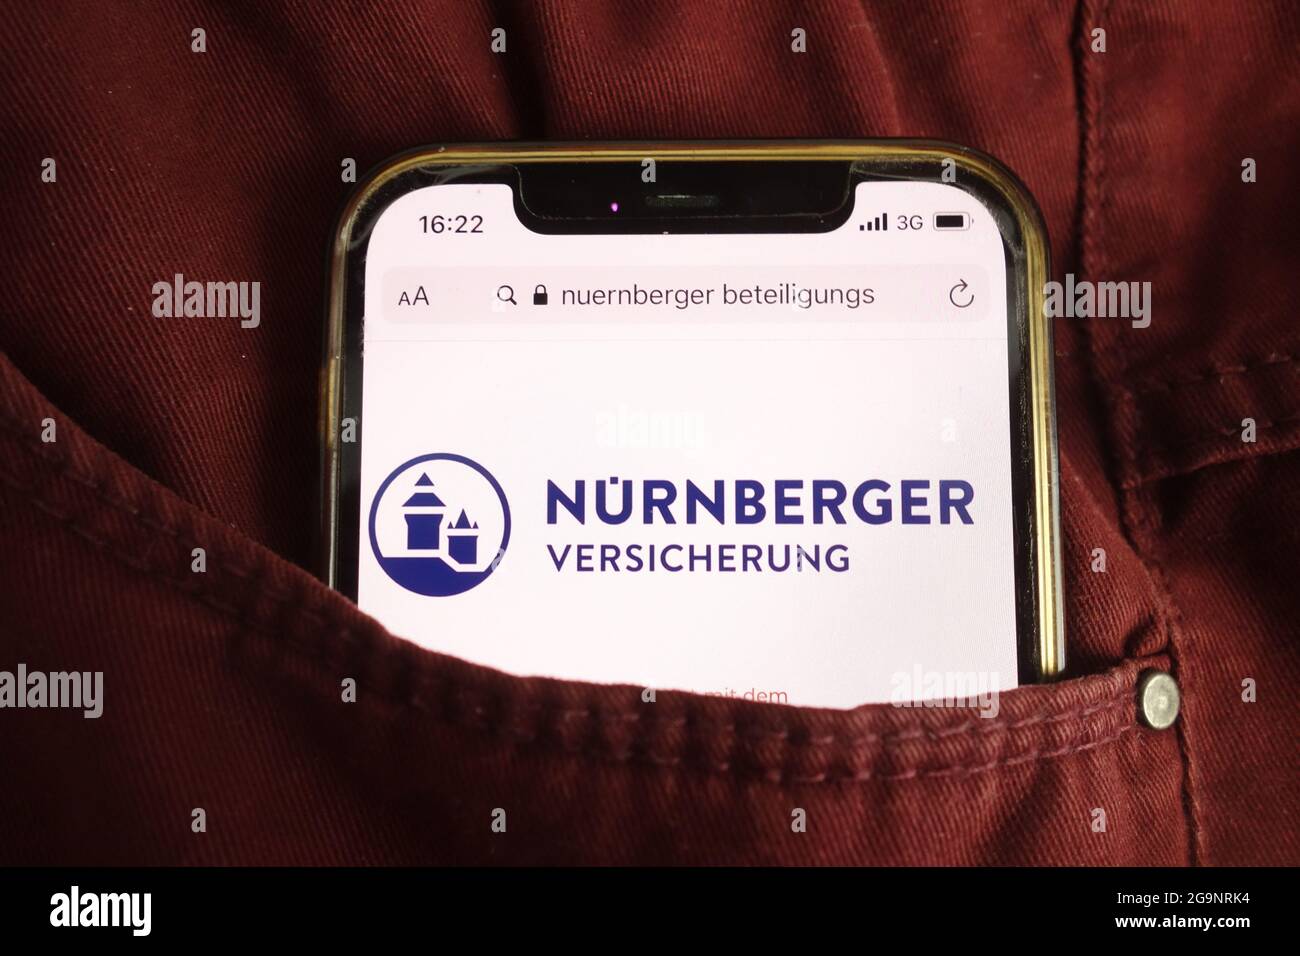 KONSKIE, POLAND - July 22, 2021: Nurnberger Versicherung logo displayed on mobile phone Stock Photo